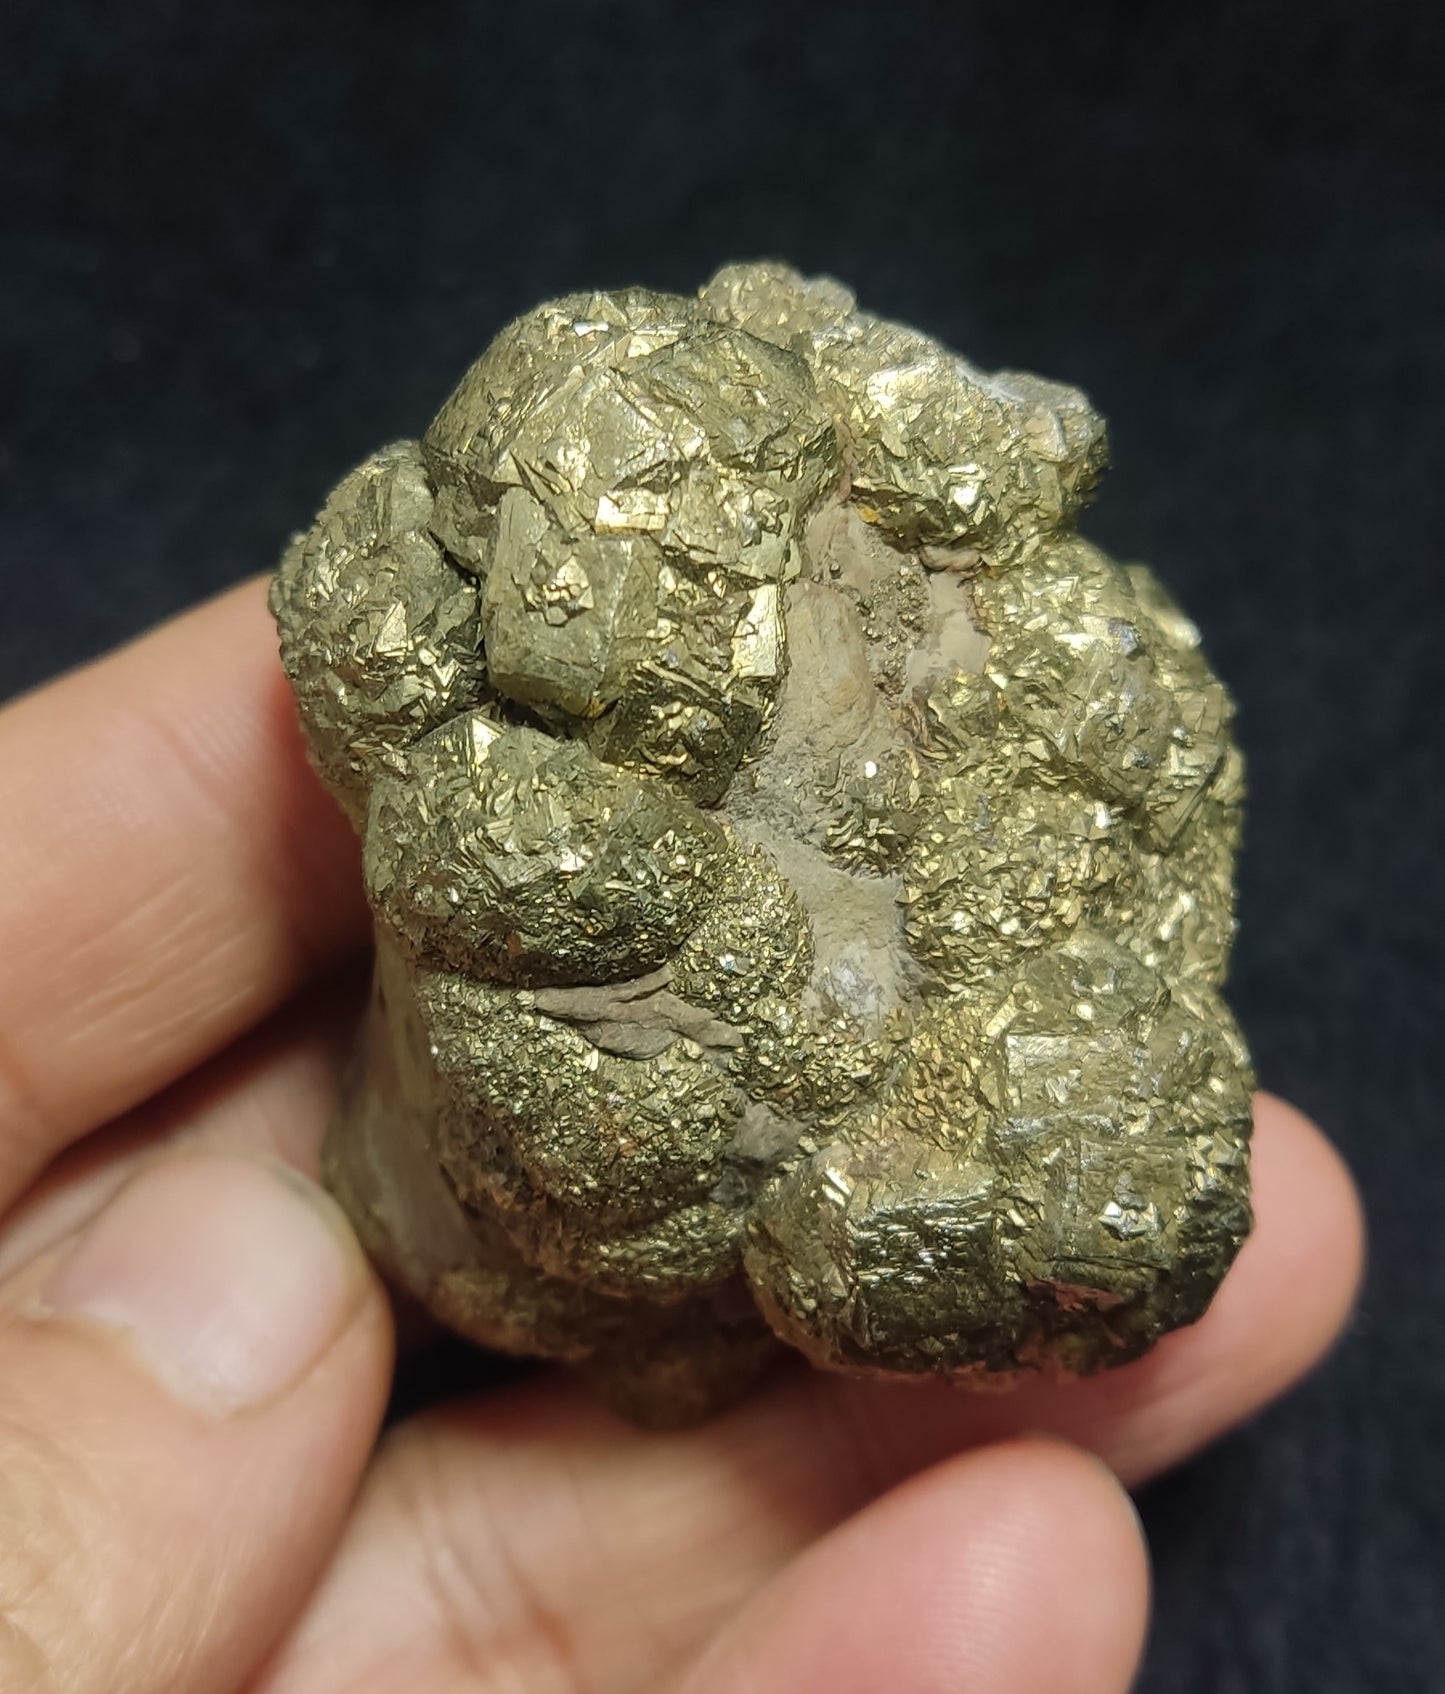 pyrite/marcasite 201 grams